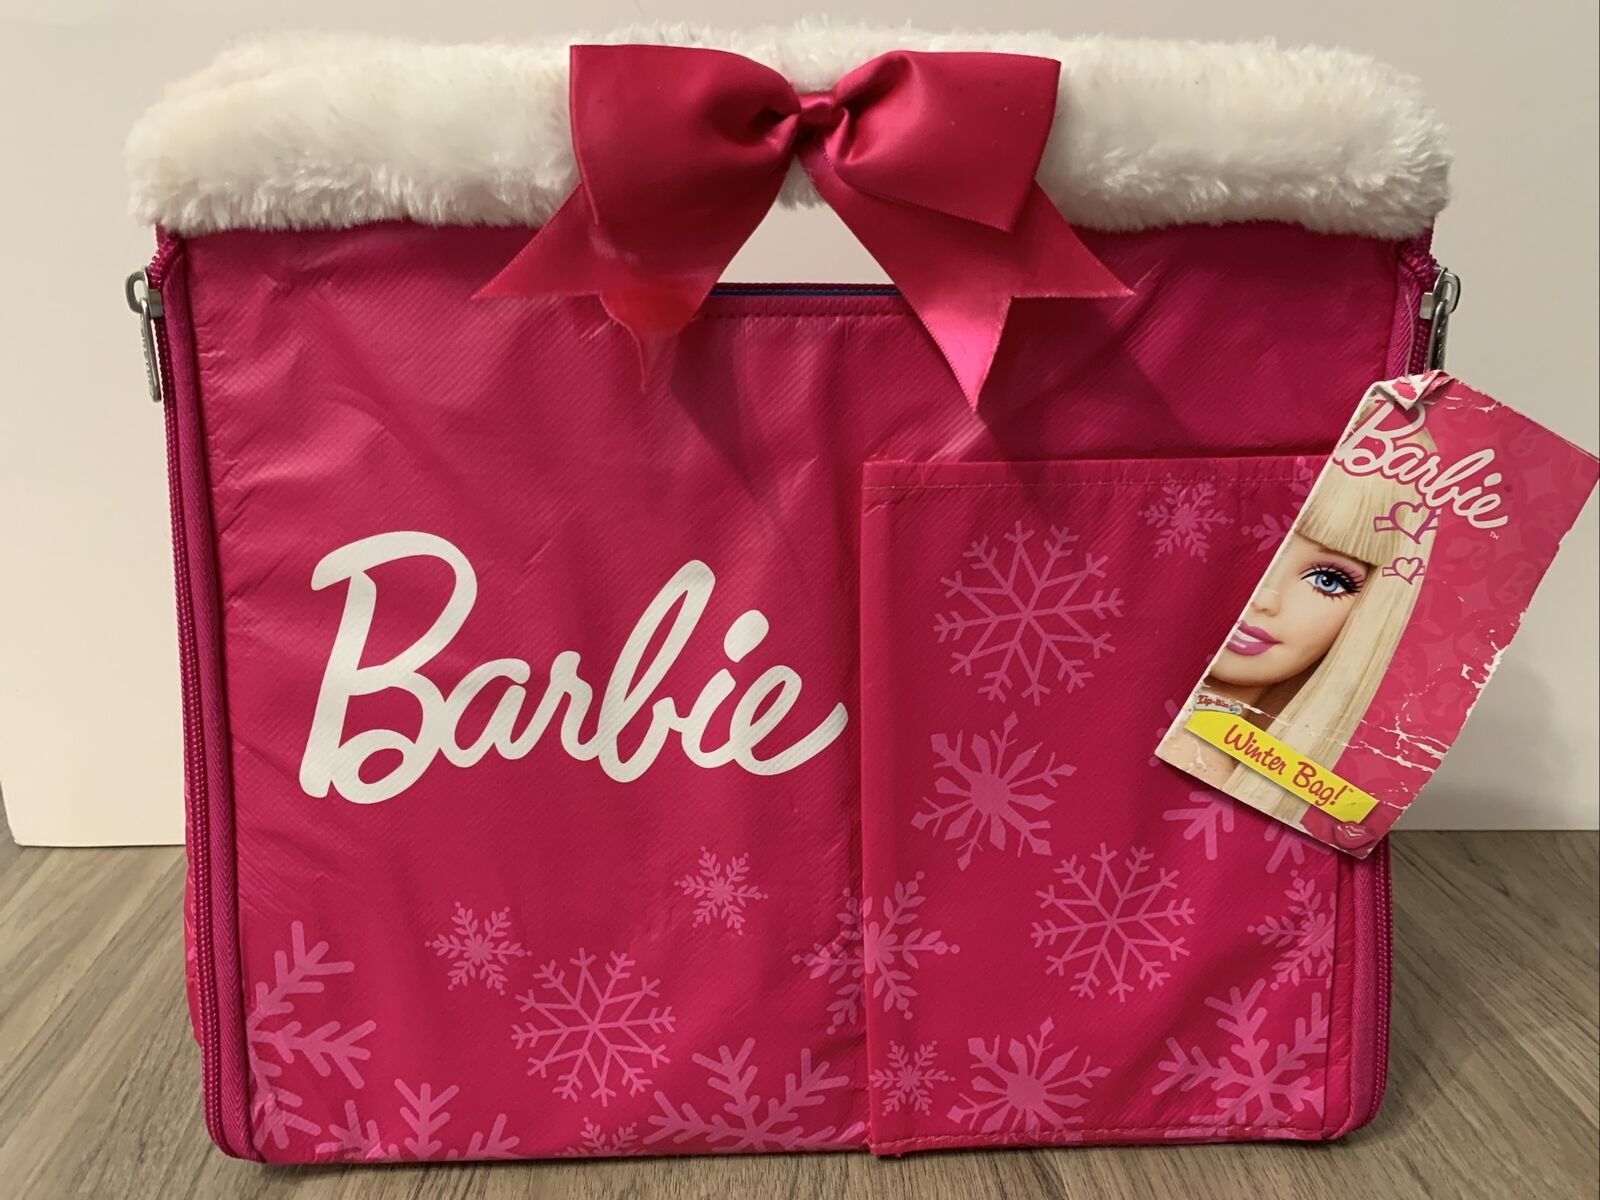 2011 Barbie Winter Bag Mattel Pink Tote Bag Purse Beauty Clutch Bag RARE NEW